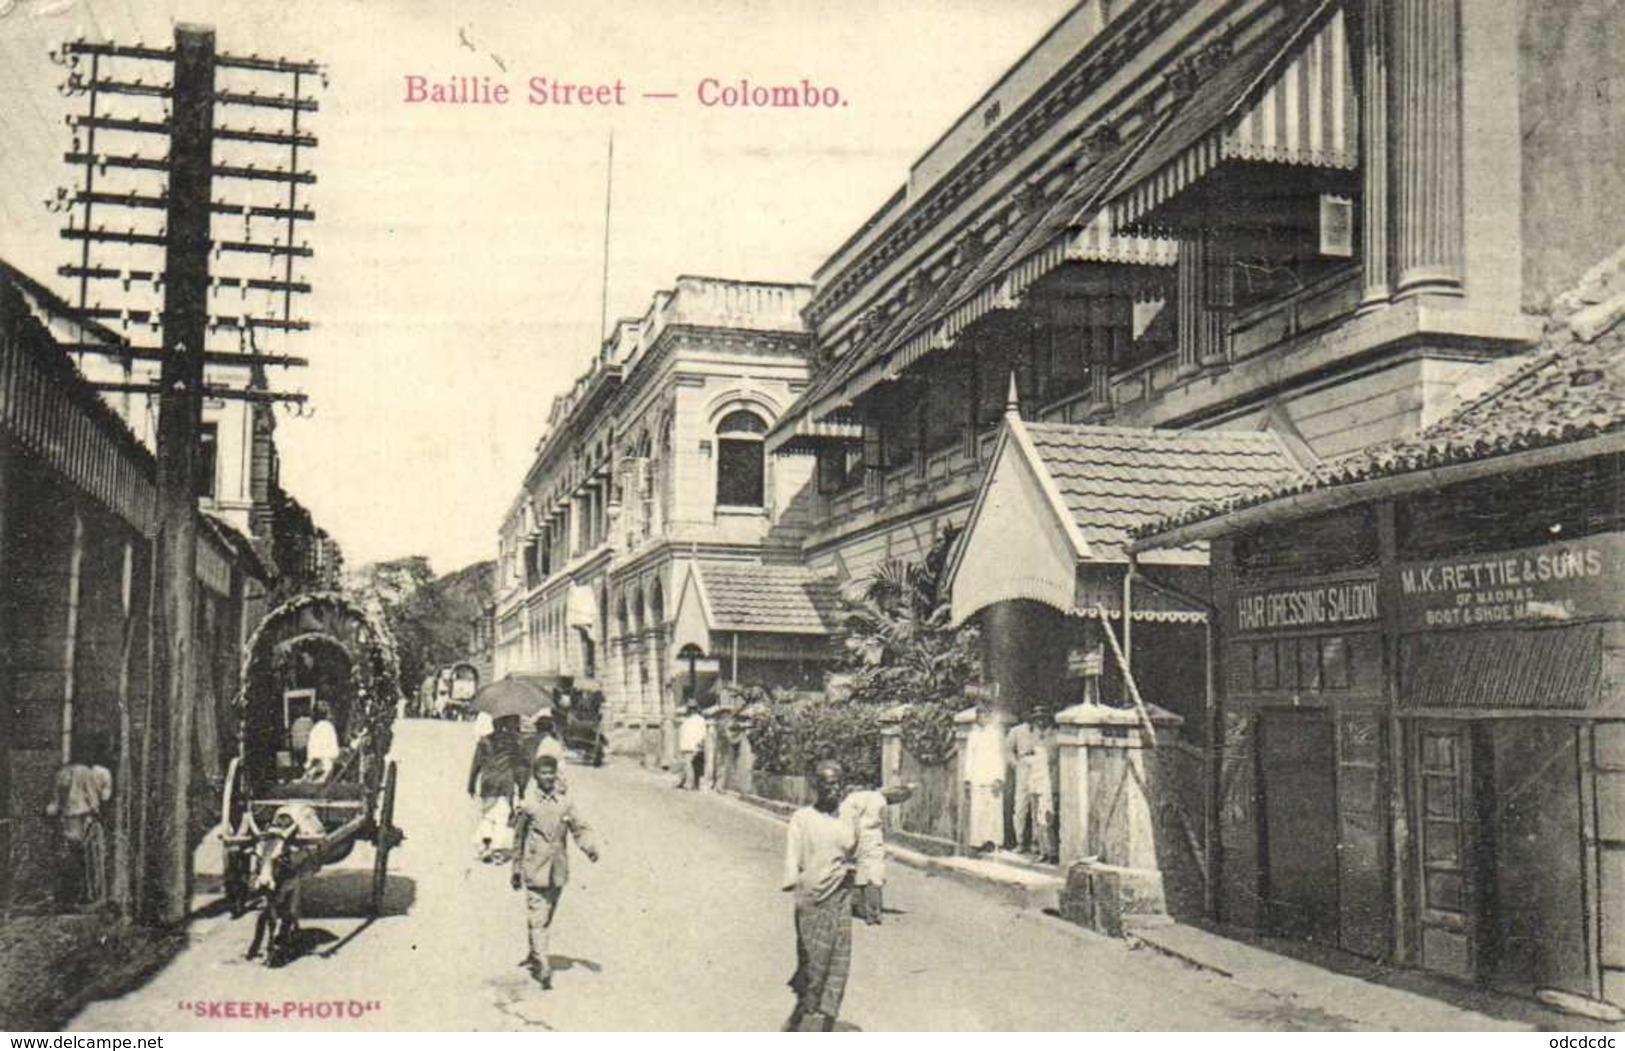 Bailly Strrt Colombo  RV Beau Timbre 6 Cents Ceylon Postage - Sri Lanka (Ceylon)